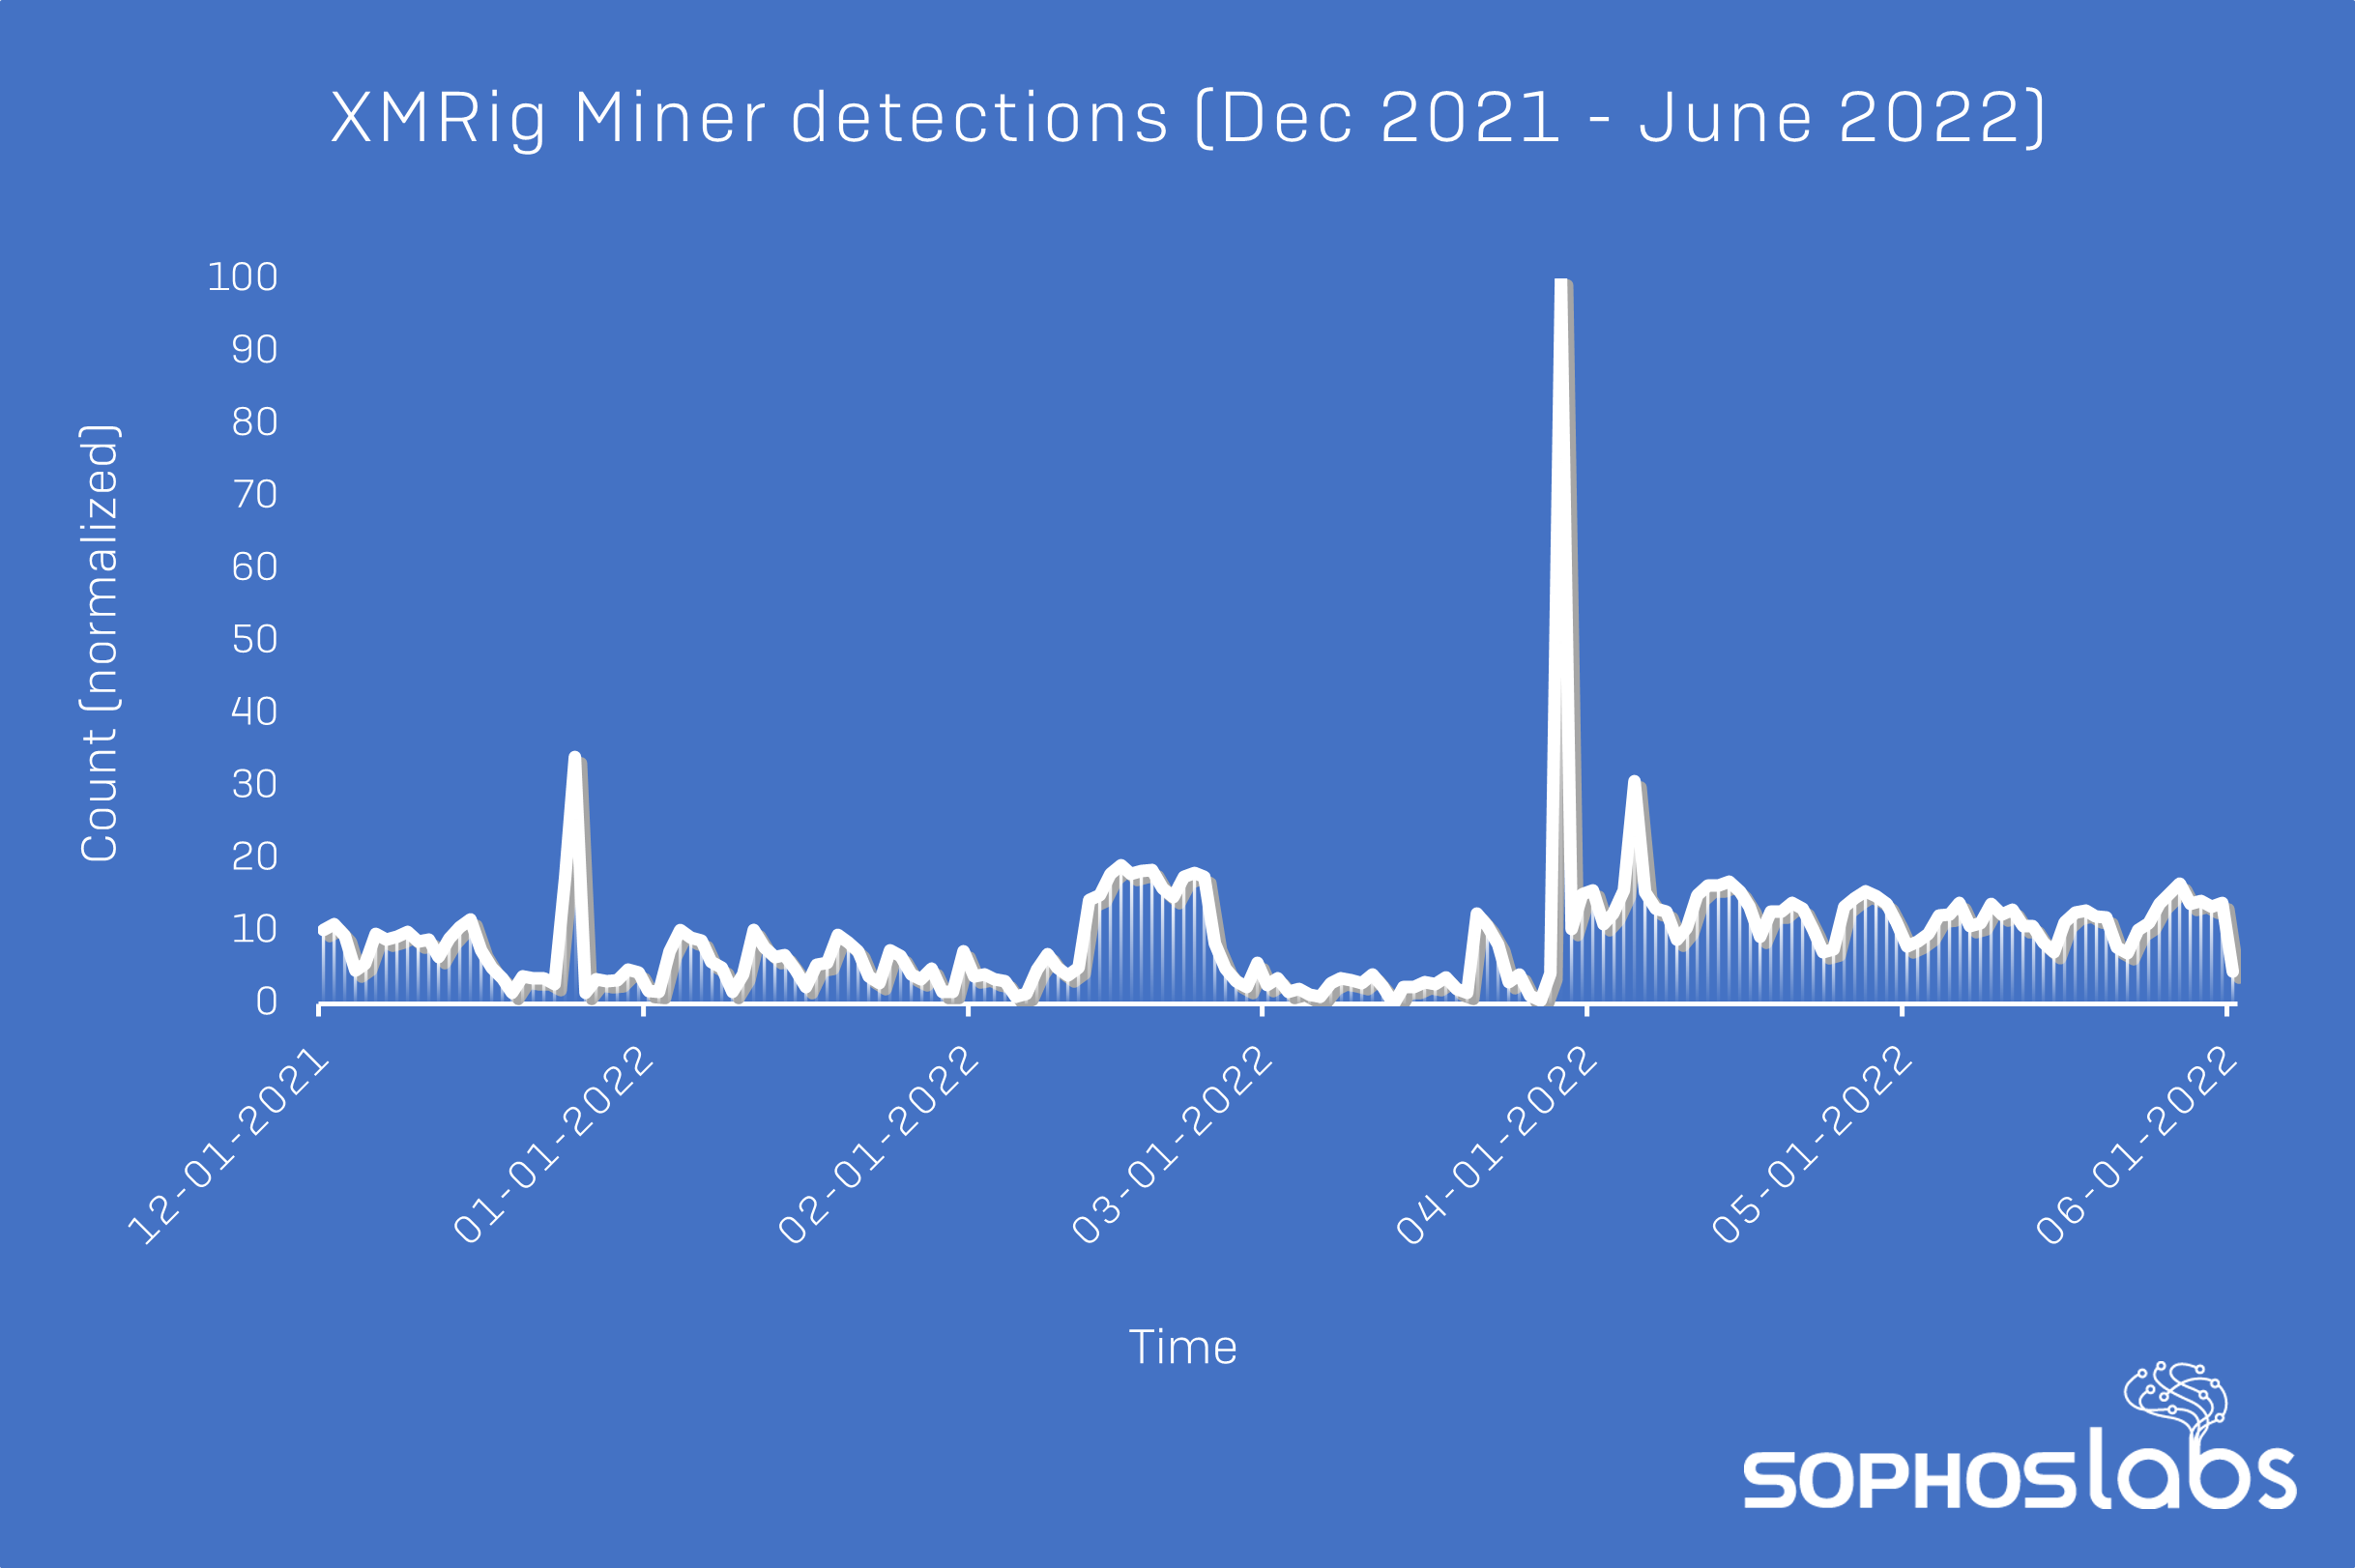 A line graph showing Sophos detections of XMRig Miner